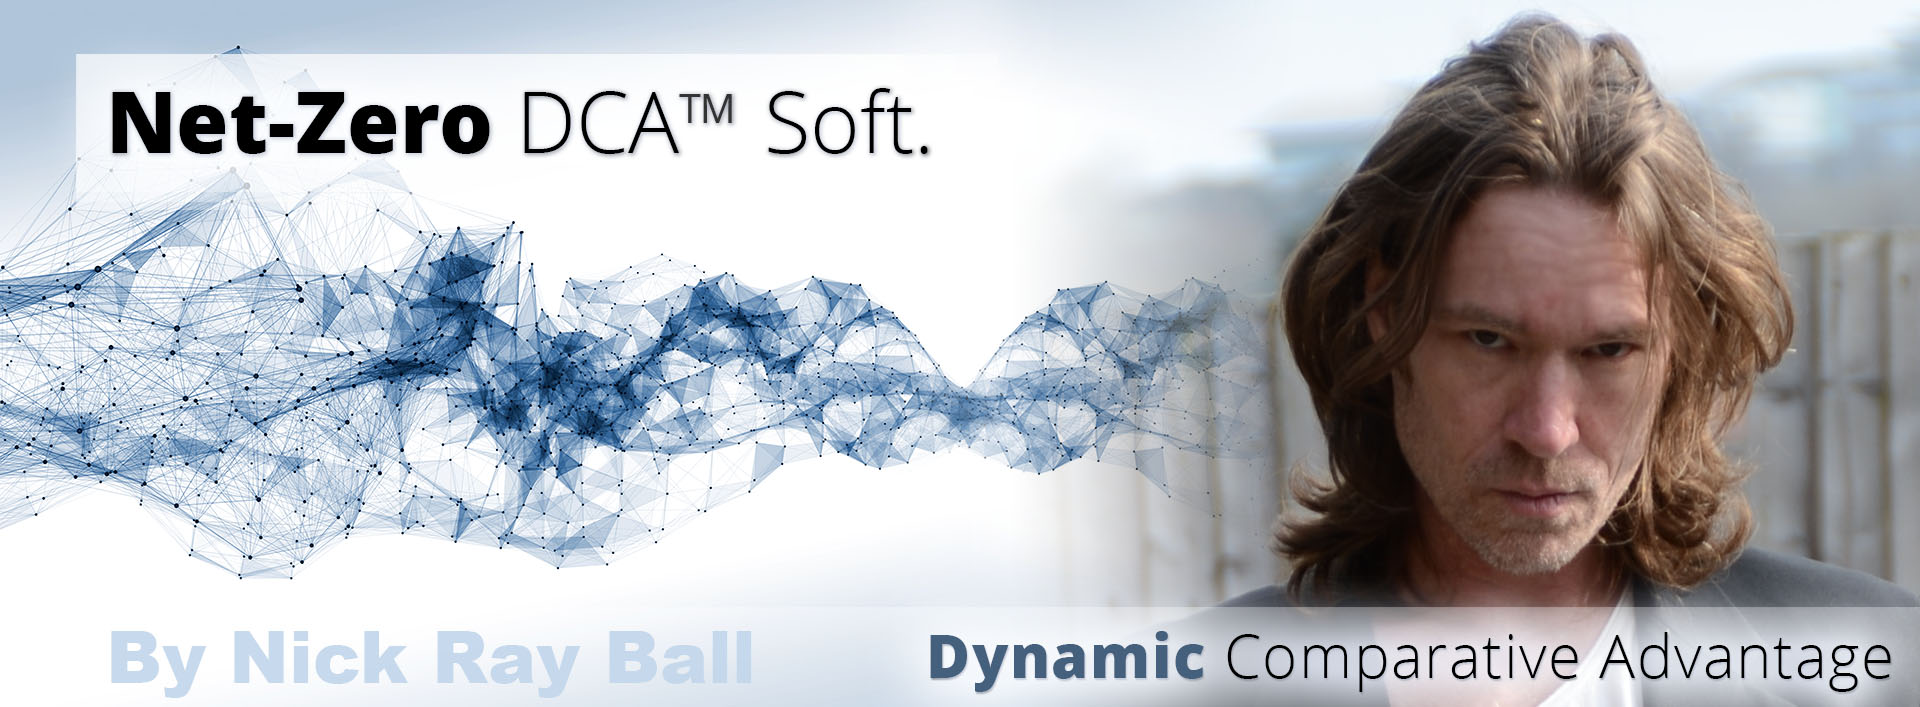 Net-Zero-DCA-Soft.__By-Nick-Ray-Ball__Dynamic-Comparative-Advantage